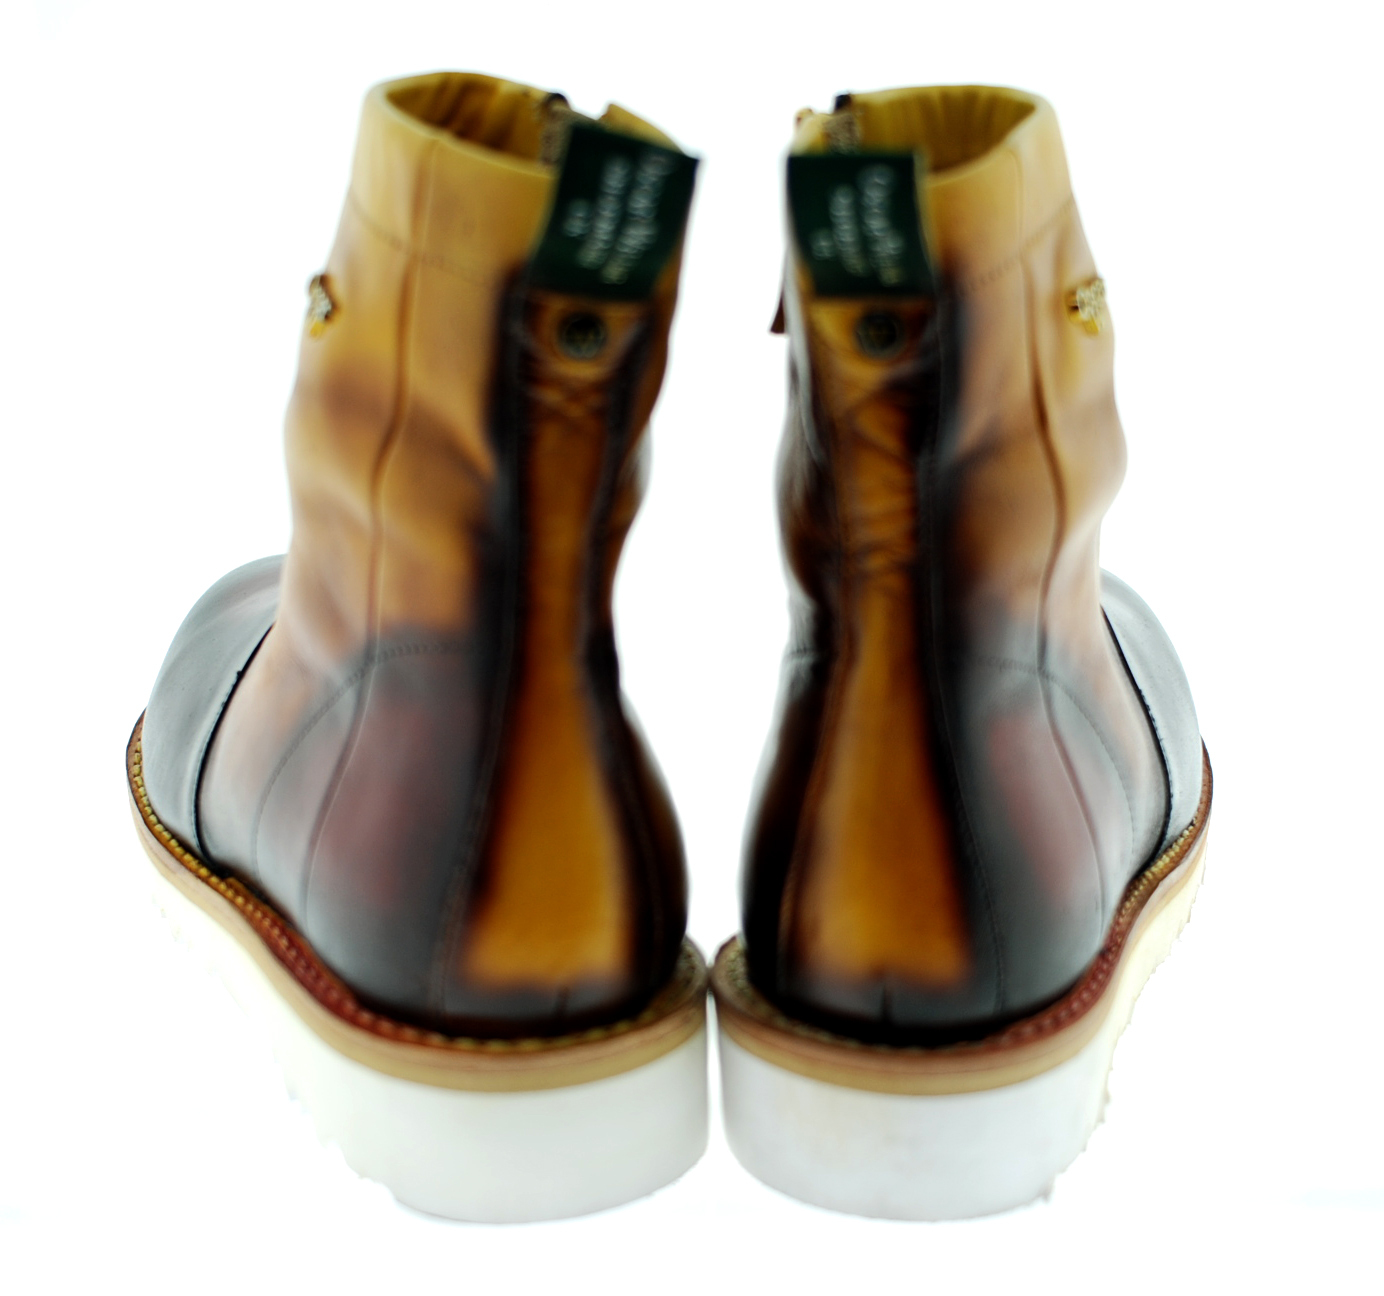 New Handmade Moc Toe Zipped Boots (Camden Town ) ID 7102